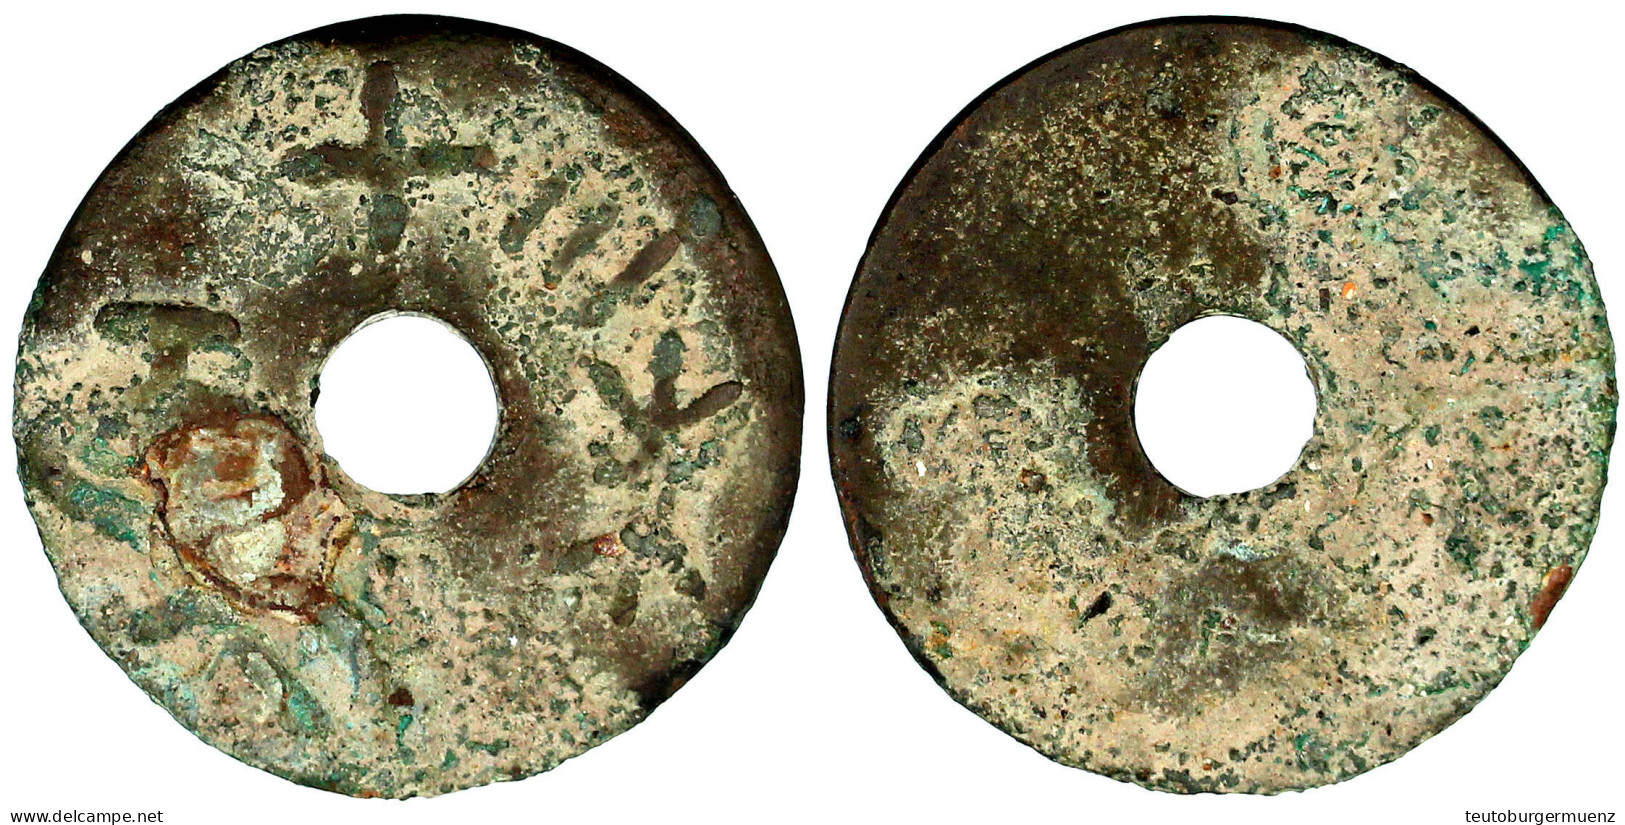 Rundmünze Zu 13 (!) Zhu 250/220 V. Chr. Zhong Shi San Zhu. 17,01 G. Sehr Schön, Sehr Selten Ex Emporium Hamburg. Hartill - China